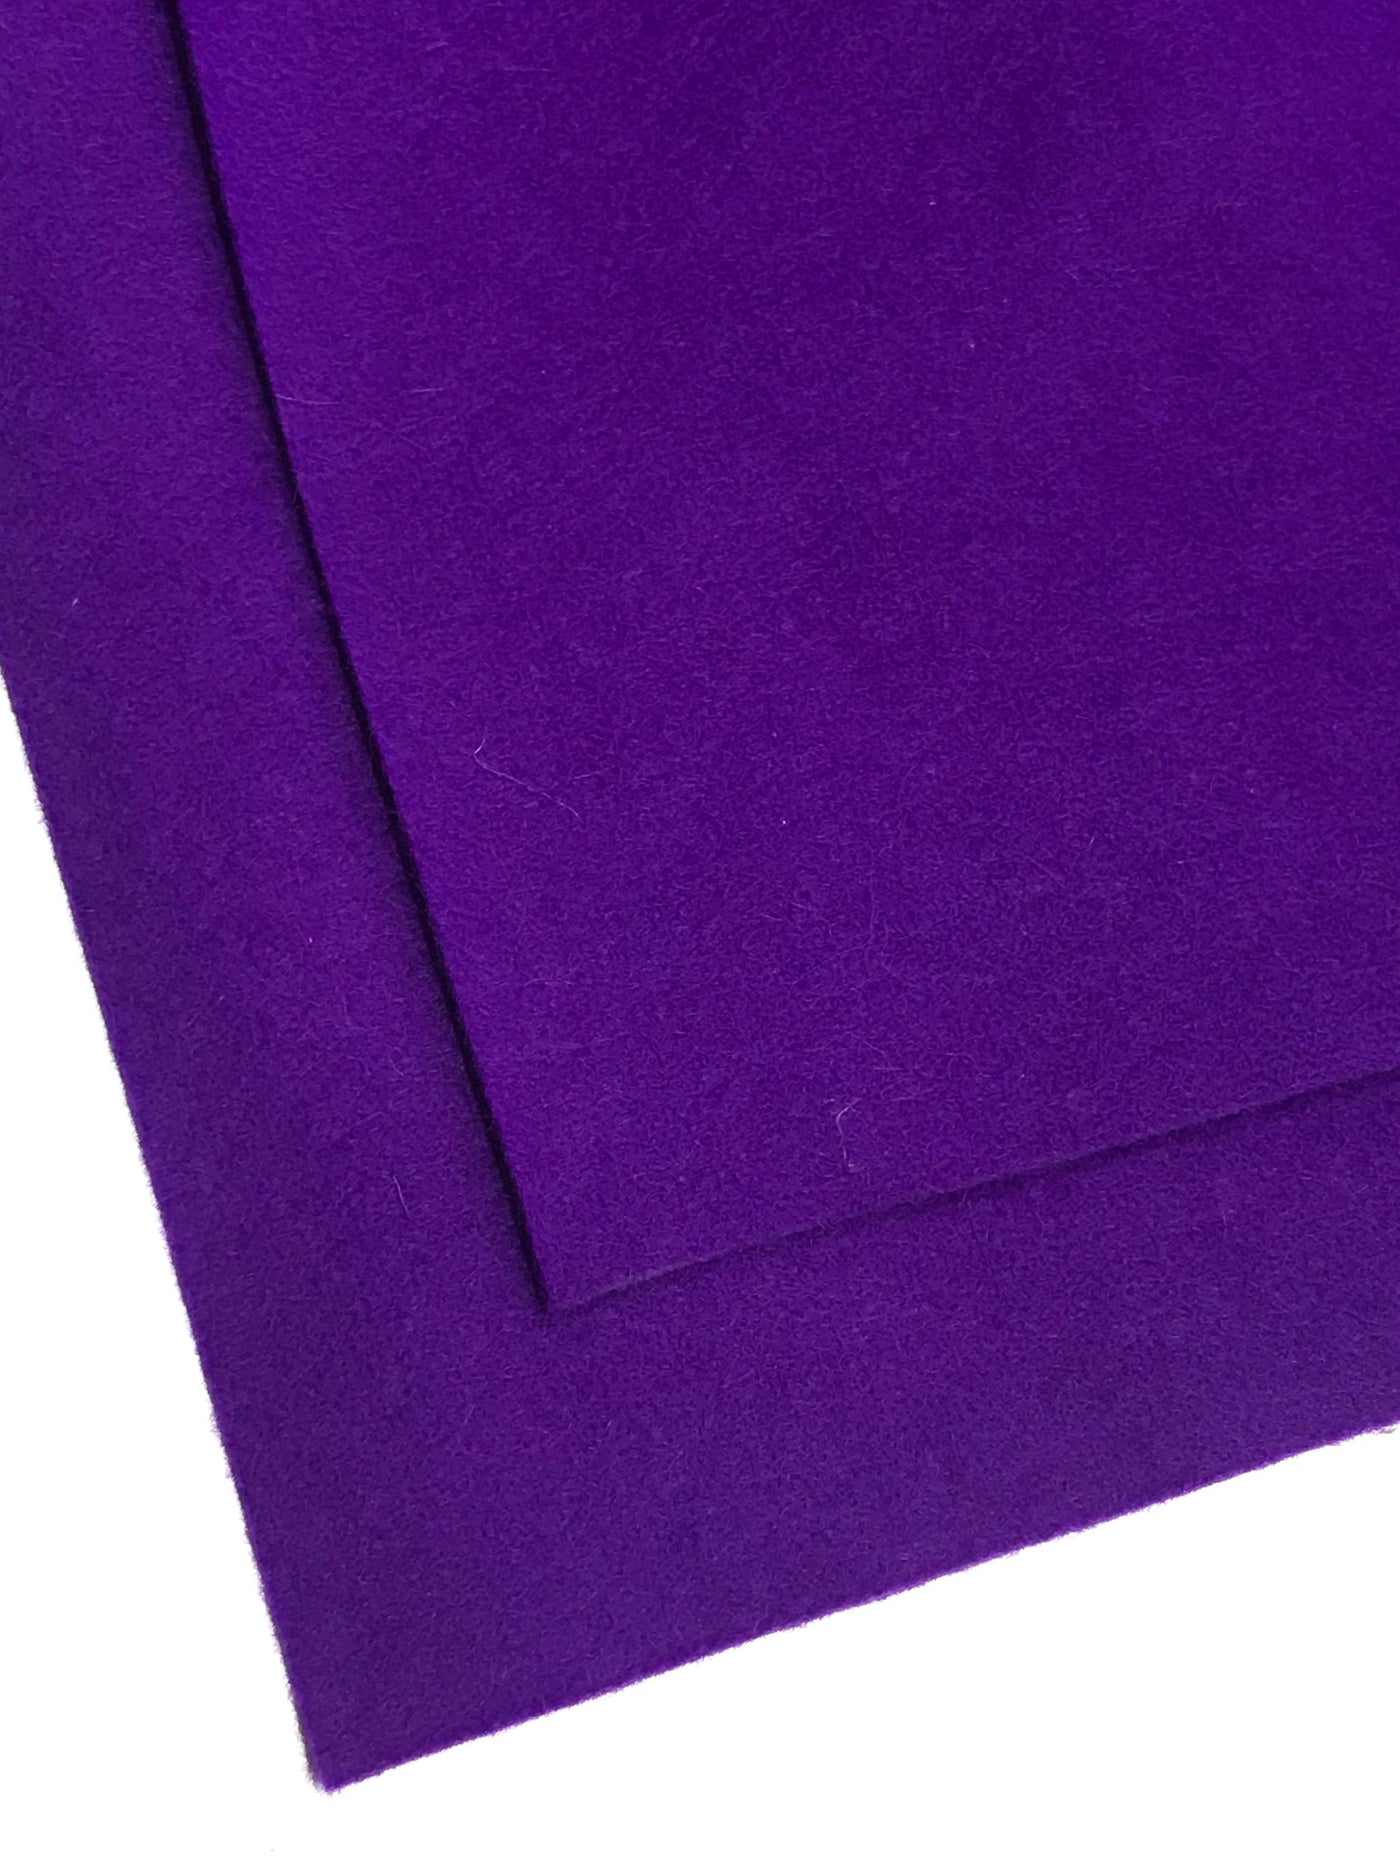 1mm Violet Purple Merino Wool Felt 8 x 11" Sheet - No. 32